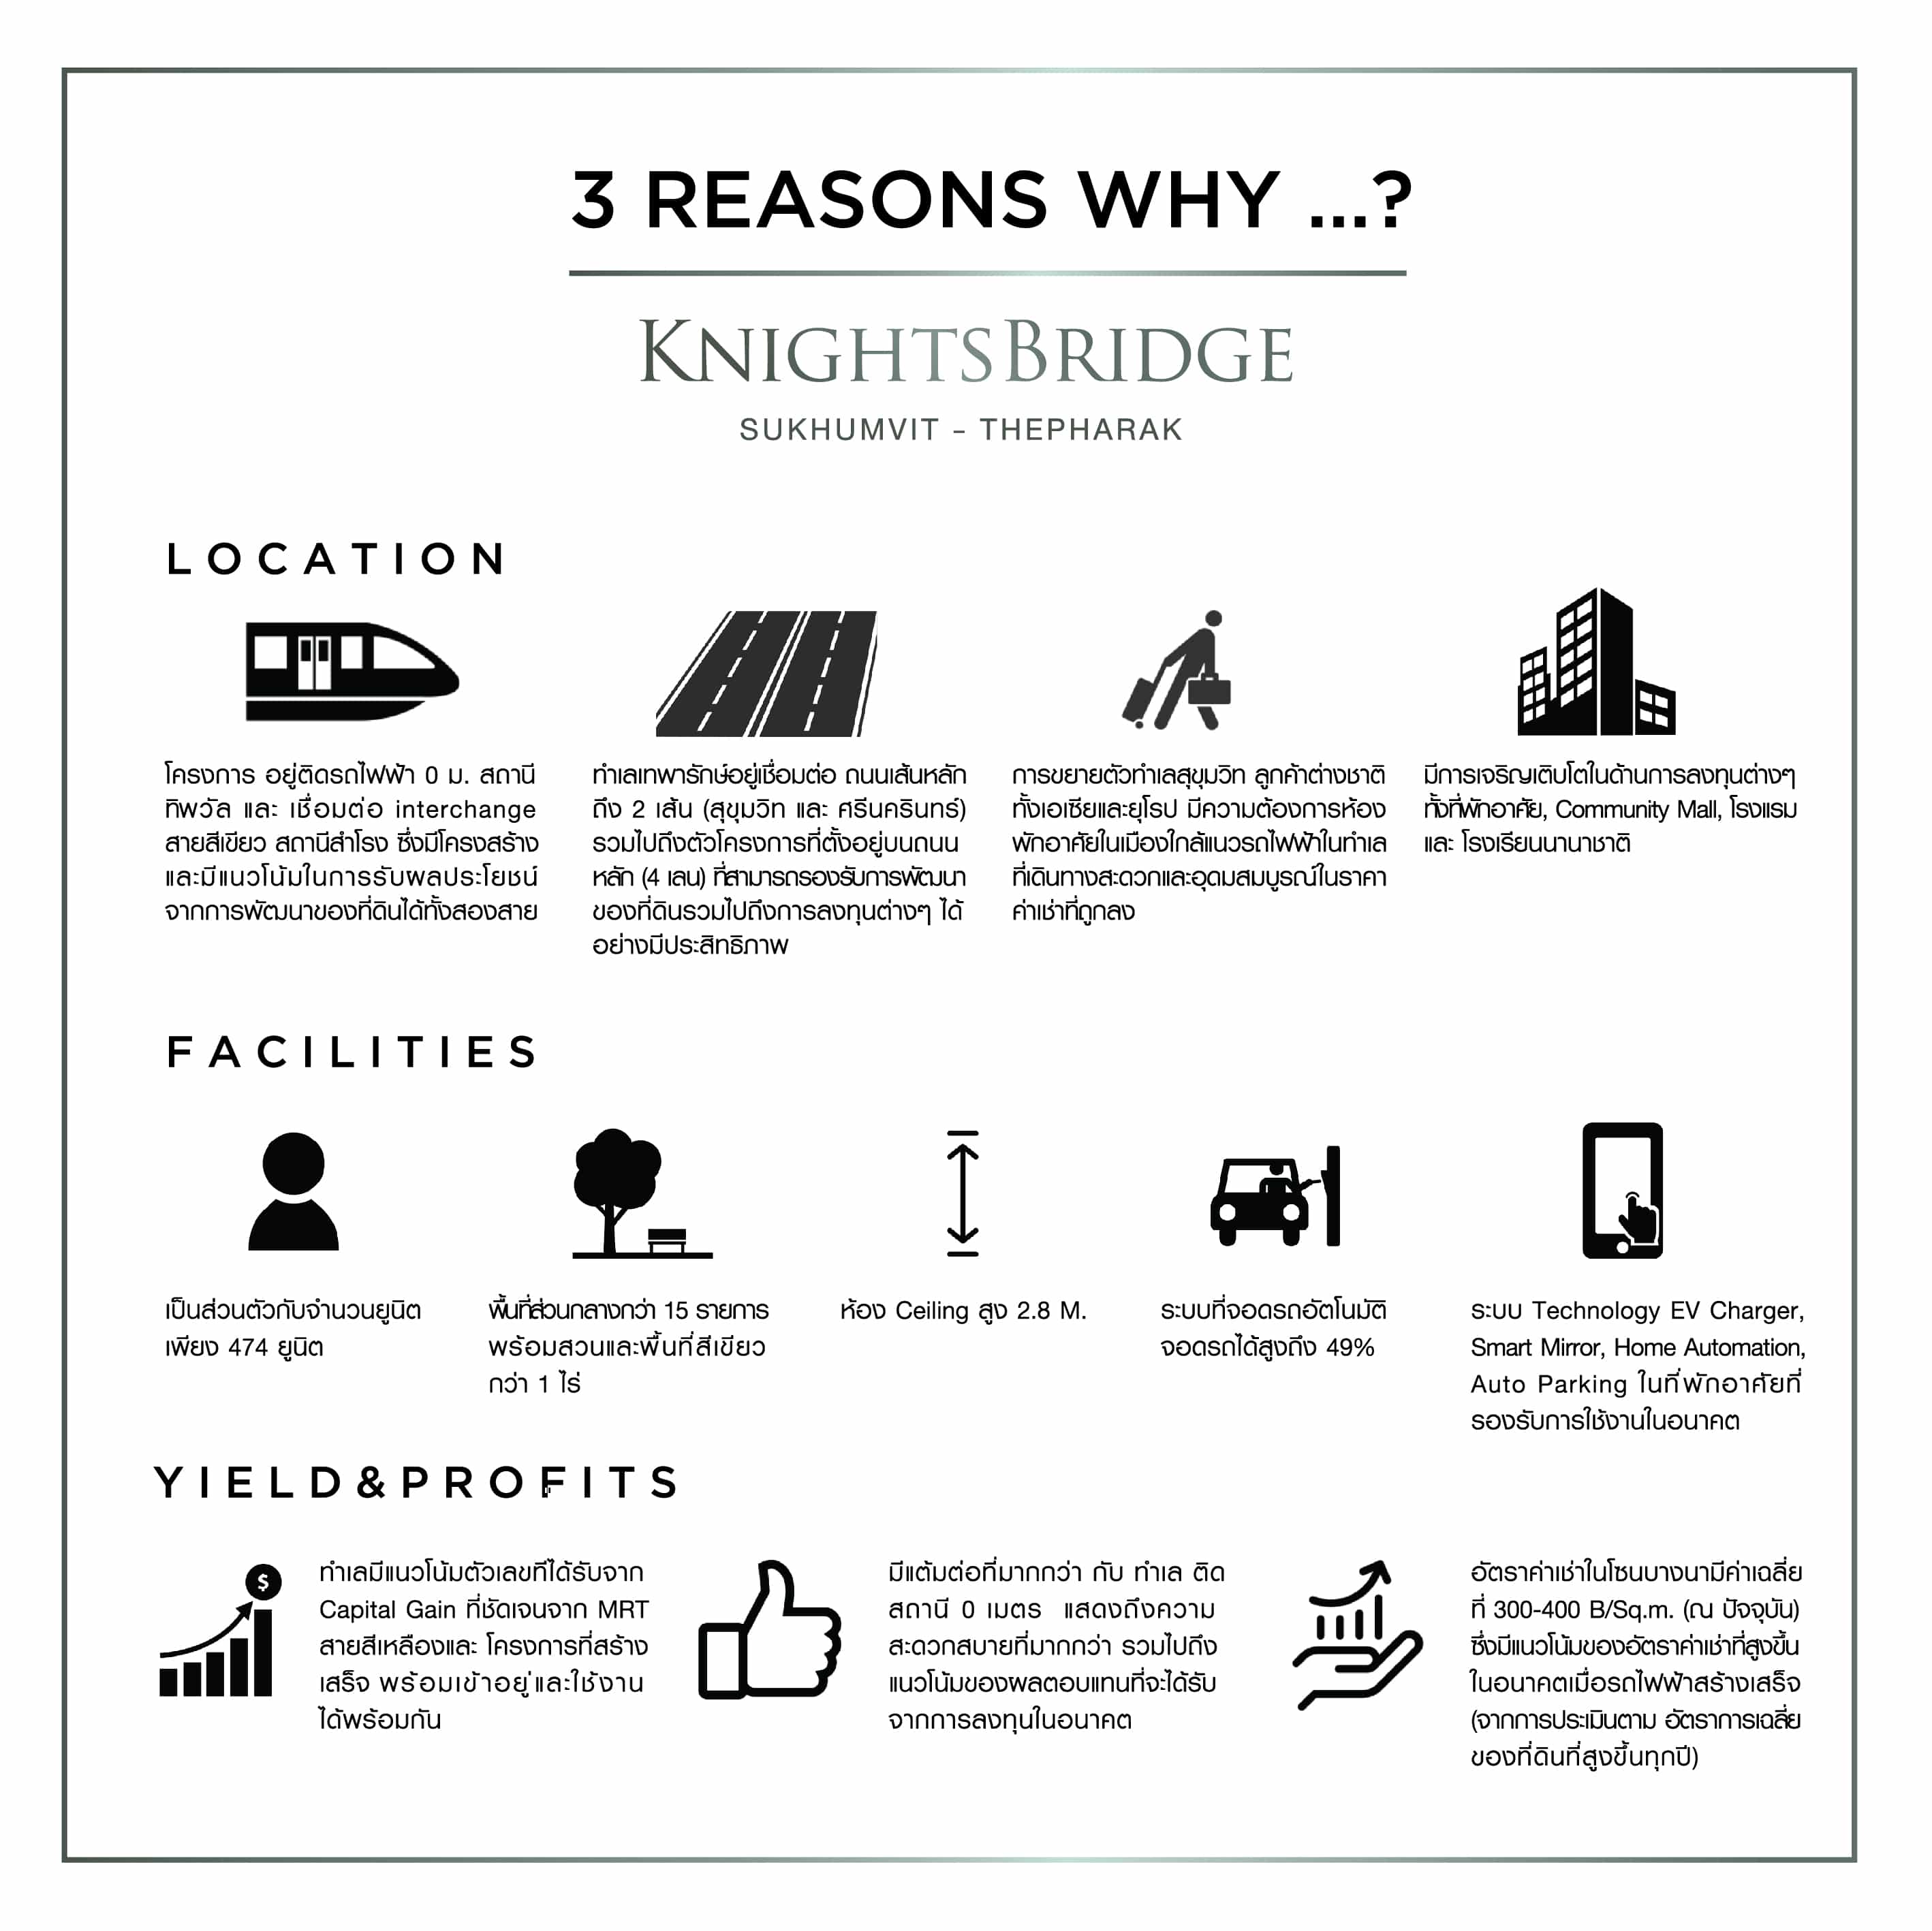 KnightsBridge Sukhumvit - Thepharak by Origin 4